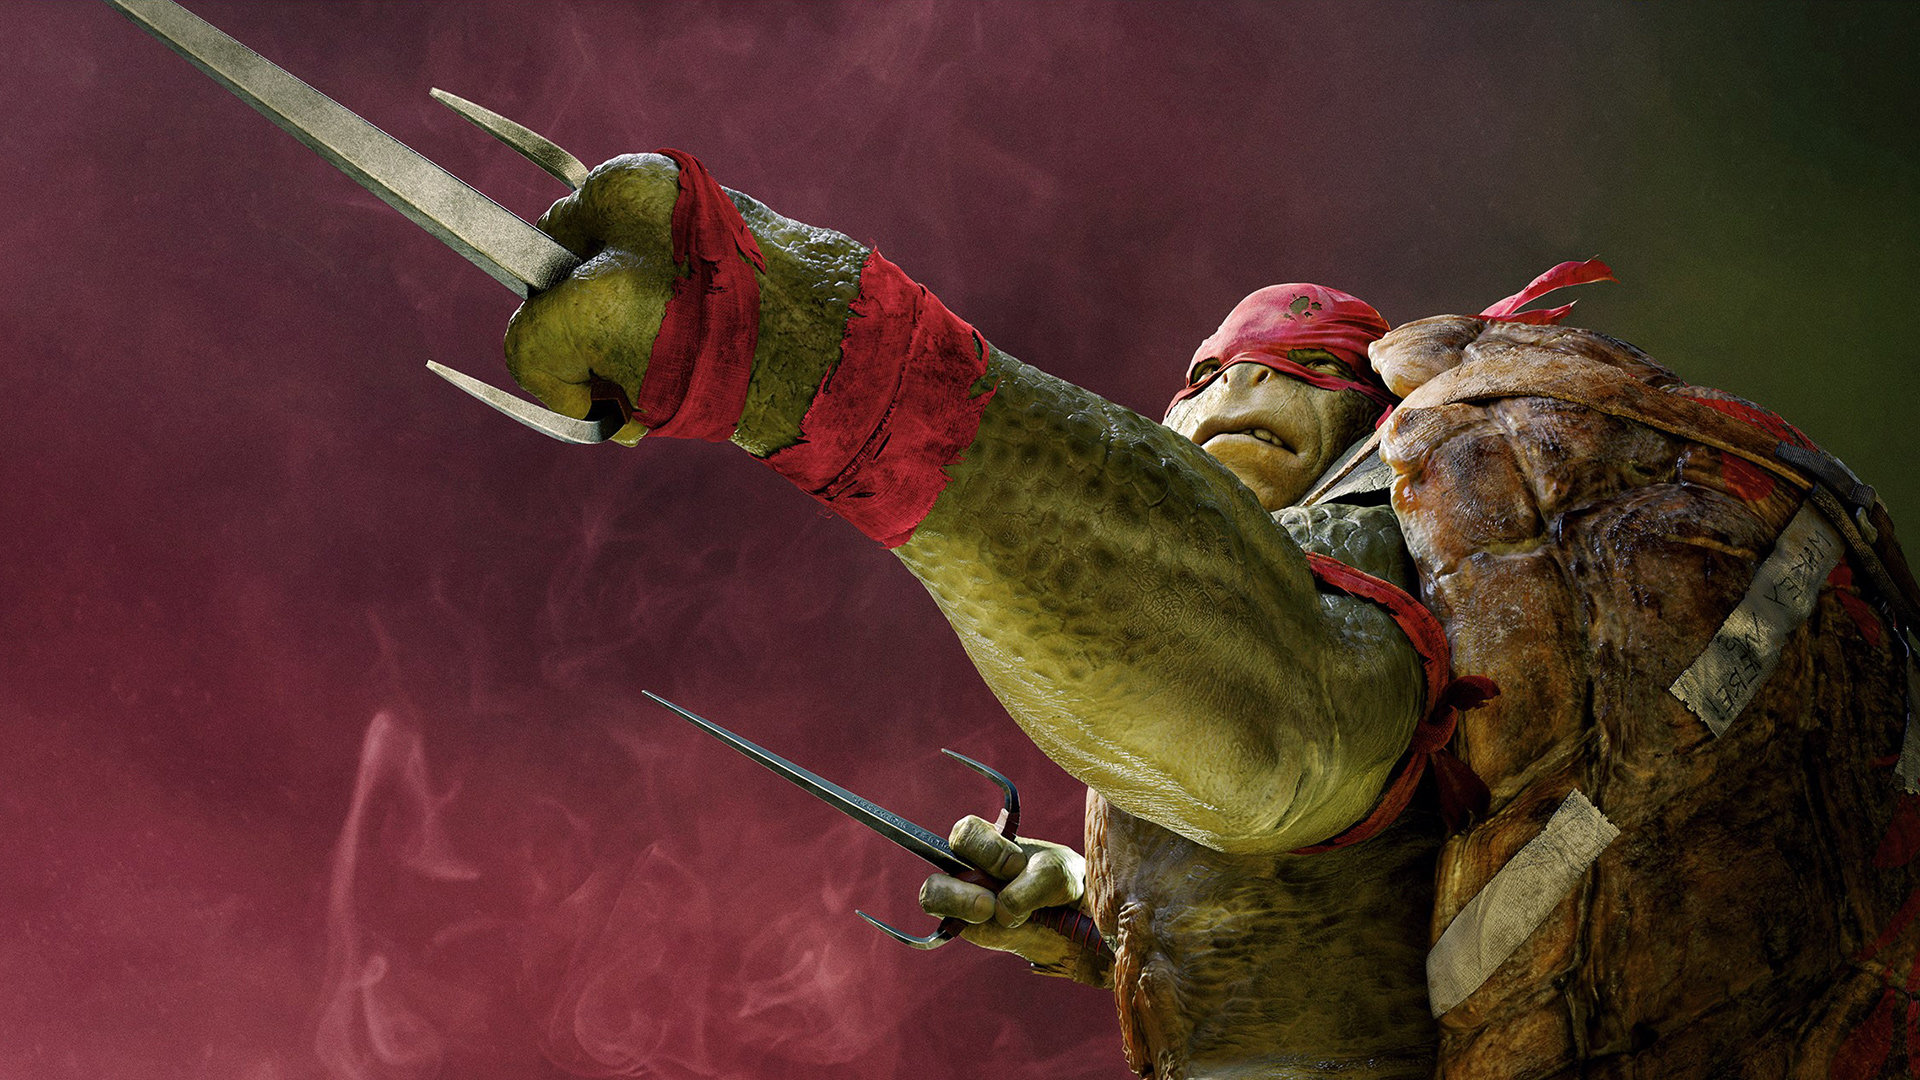 Awesome Teenage Mutant Ninja Turtles (2014) TMNT movie free background ID:234212 for full hd 1920x1080 desktop